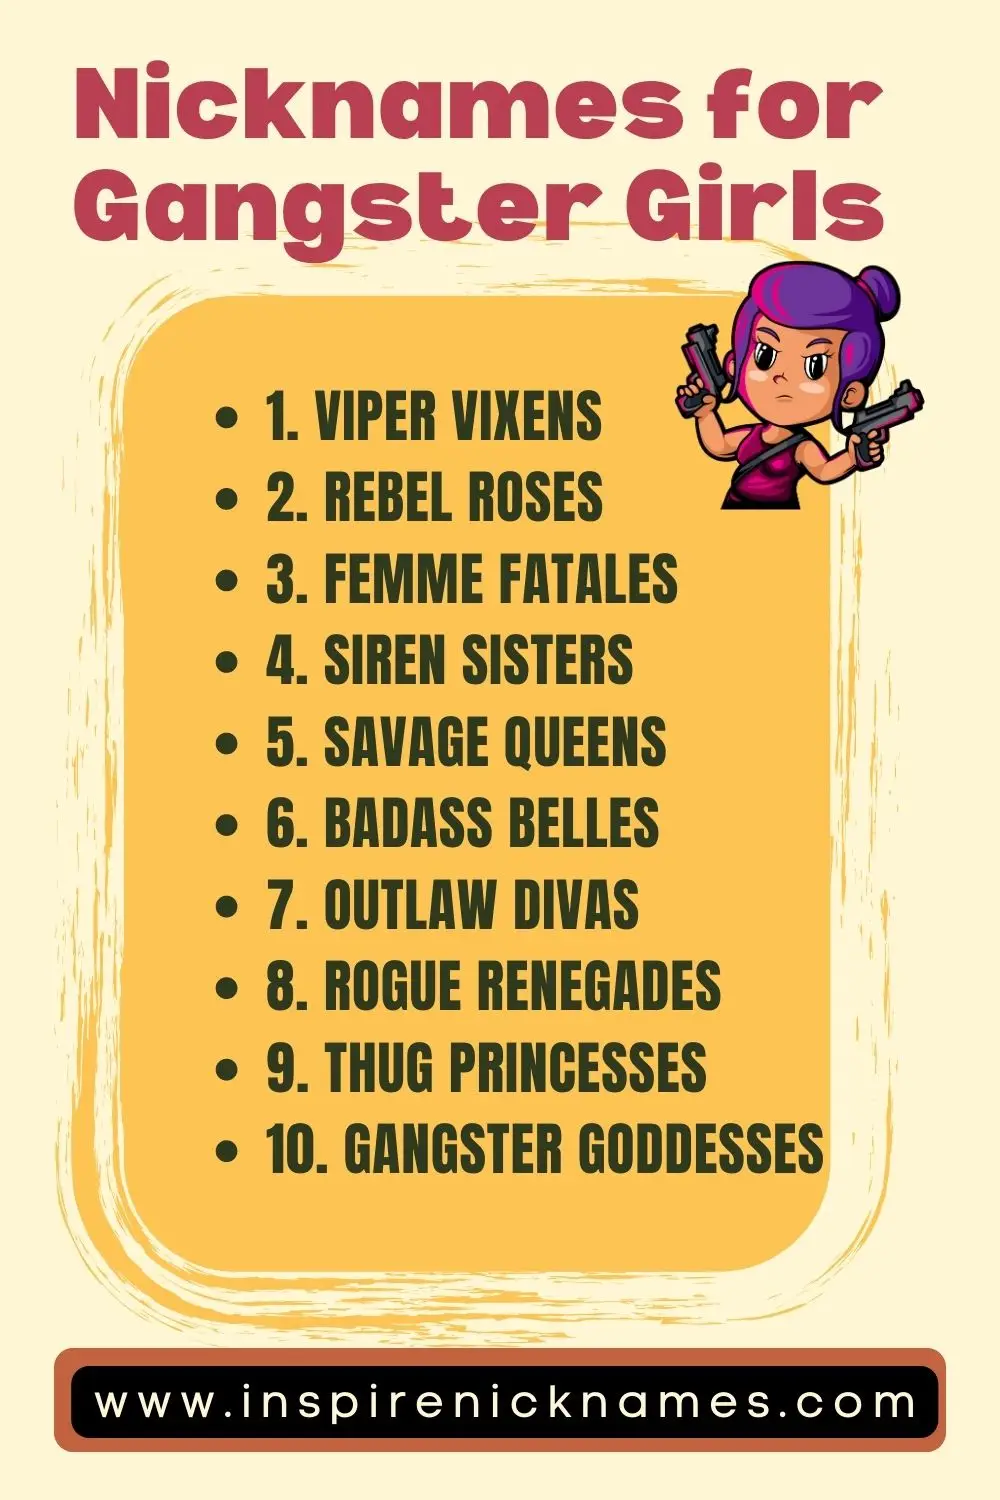  nicknames for gangster girls list ideas